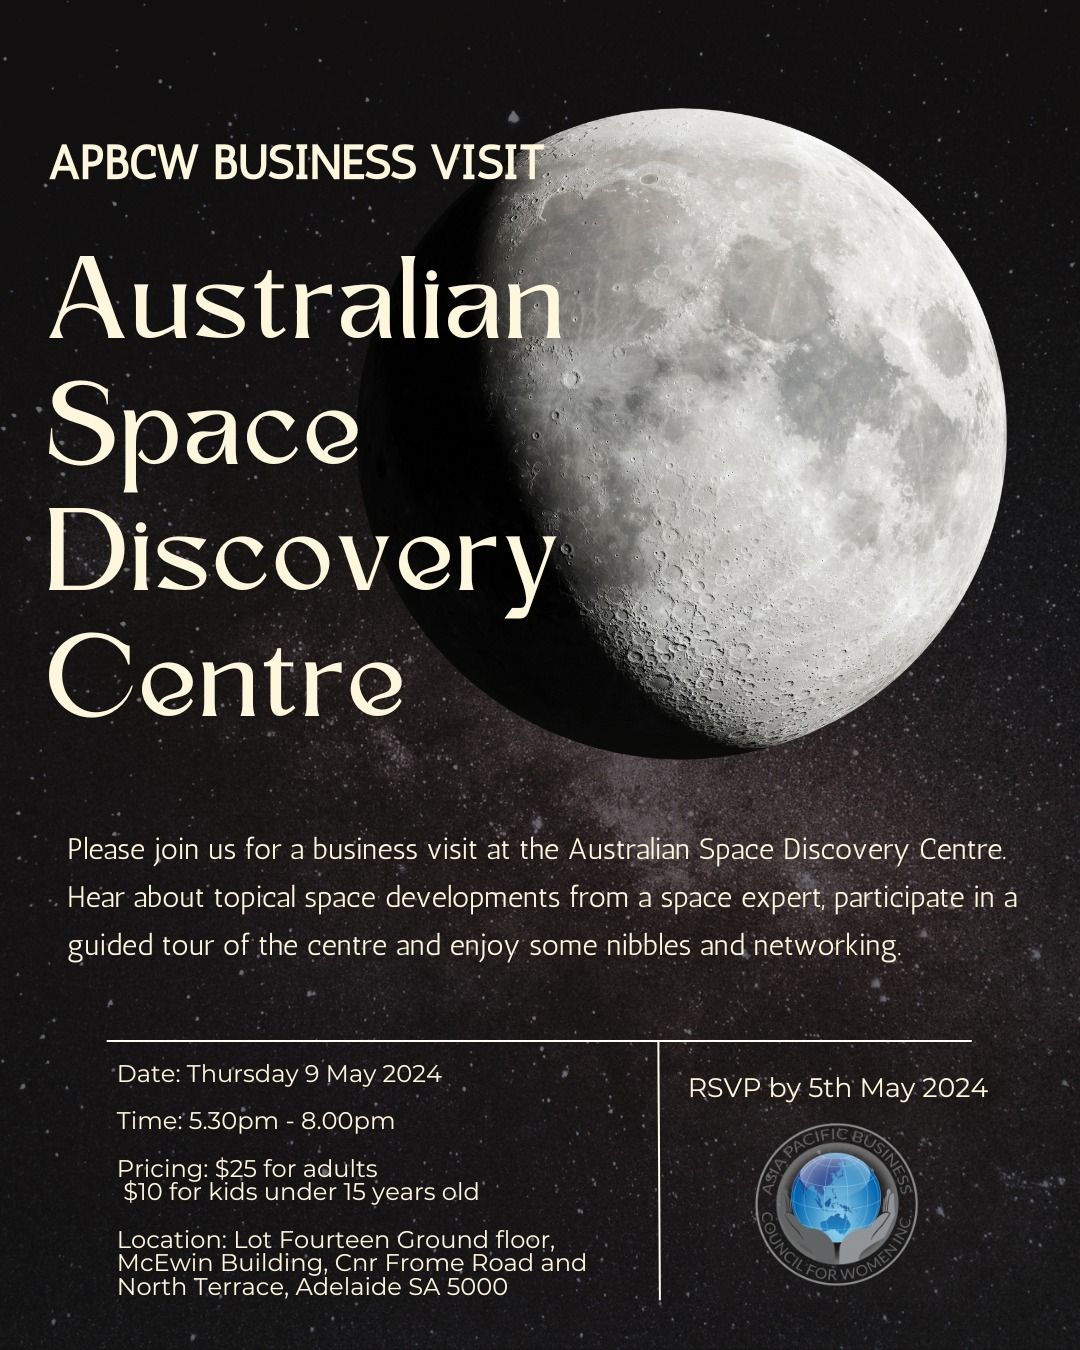 APBCW Business Visit - Australian Space Discovery Centre